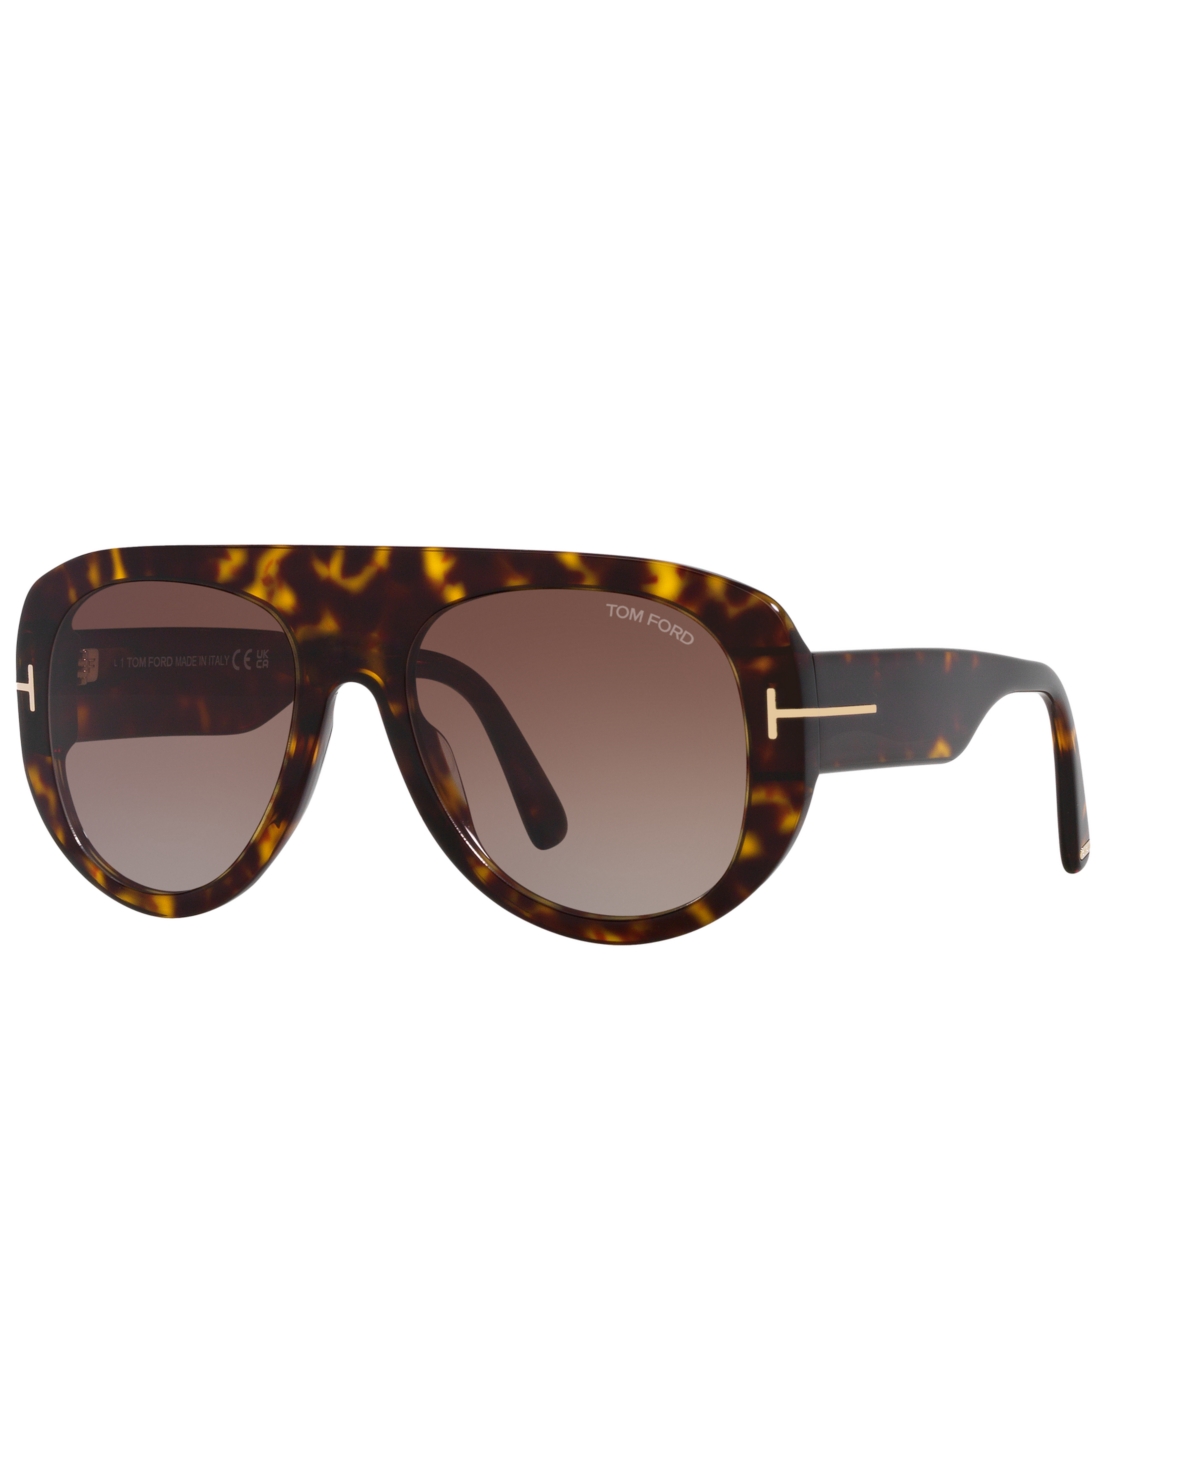 Men's Sunglasses, Cecil - Tortoise Black